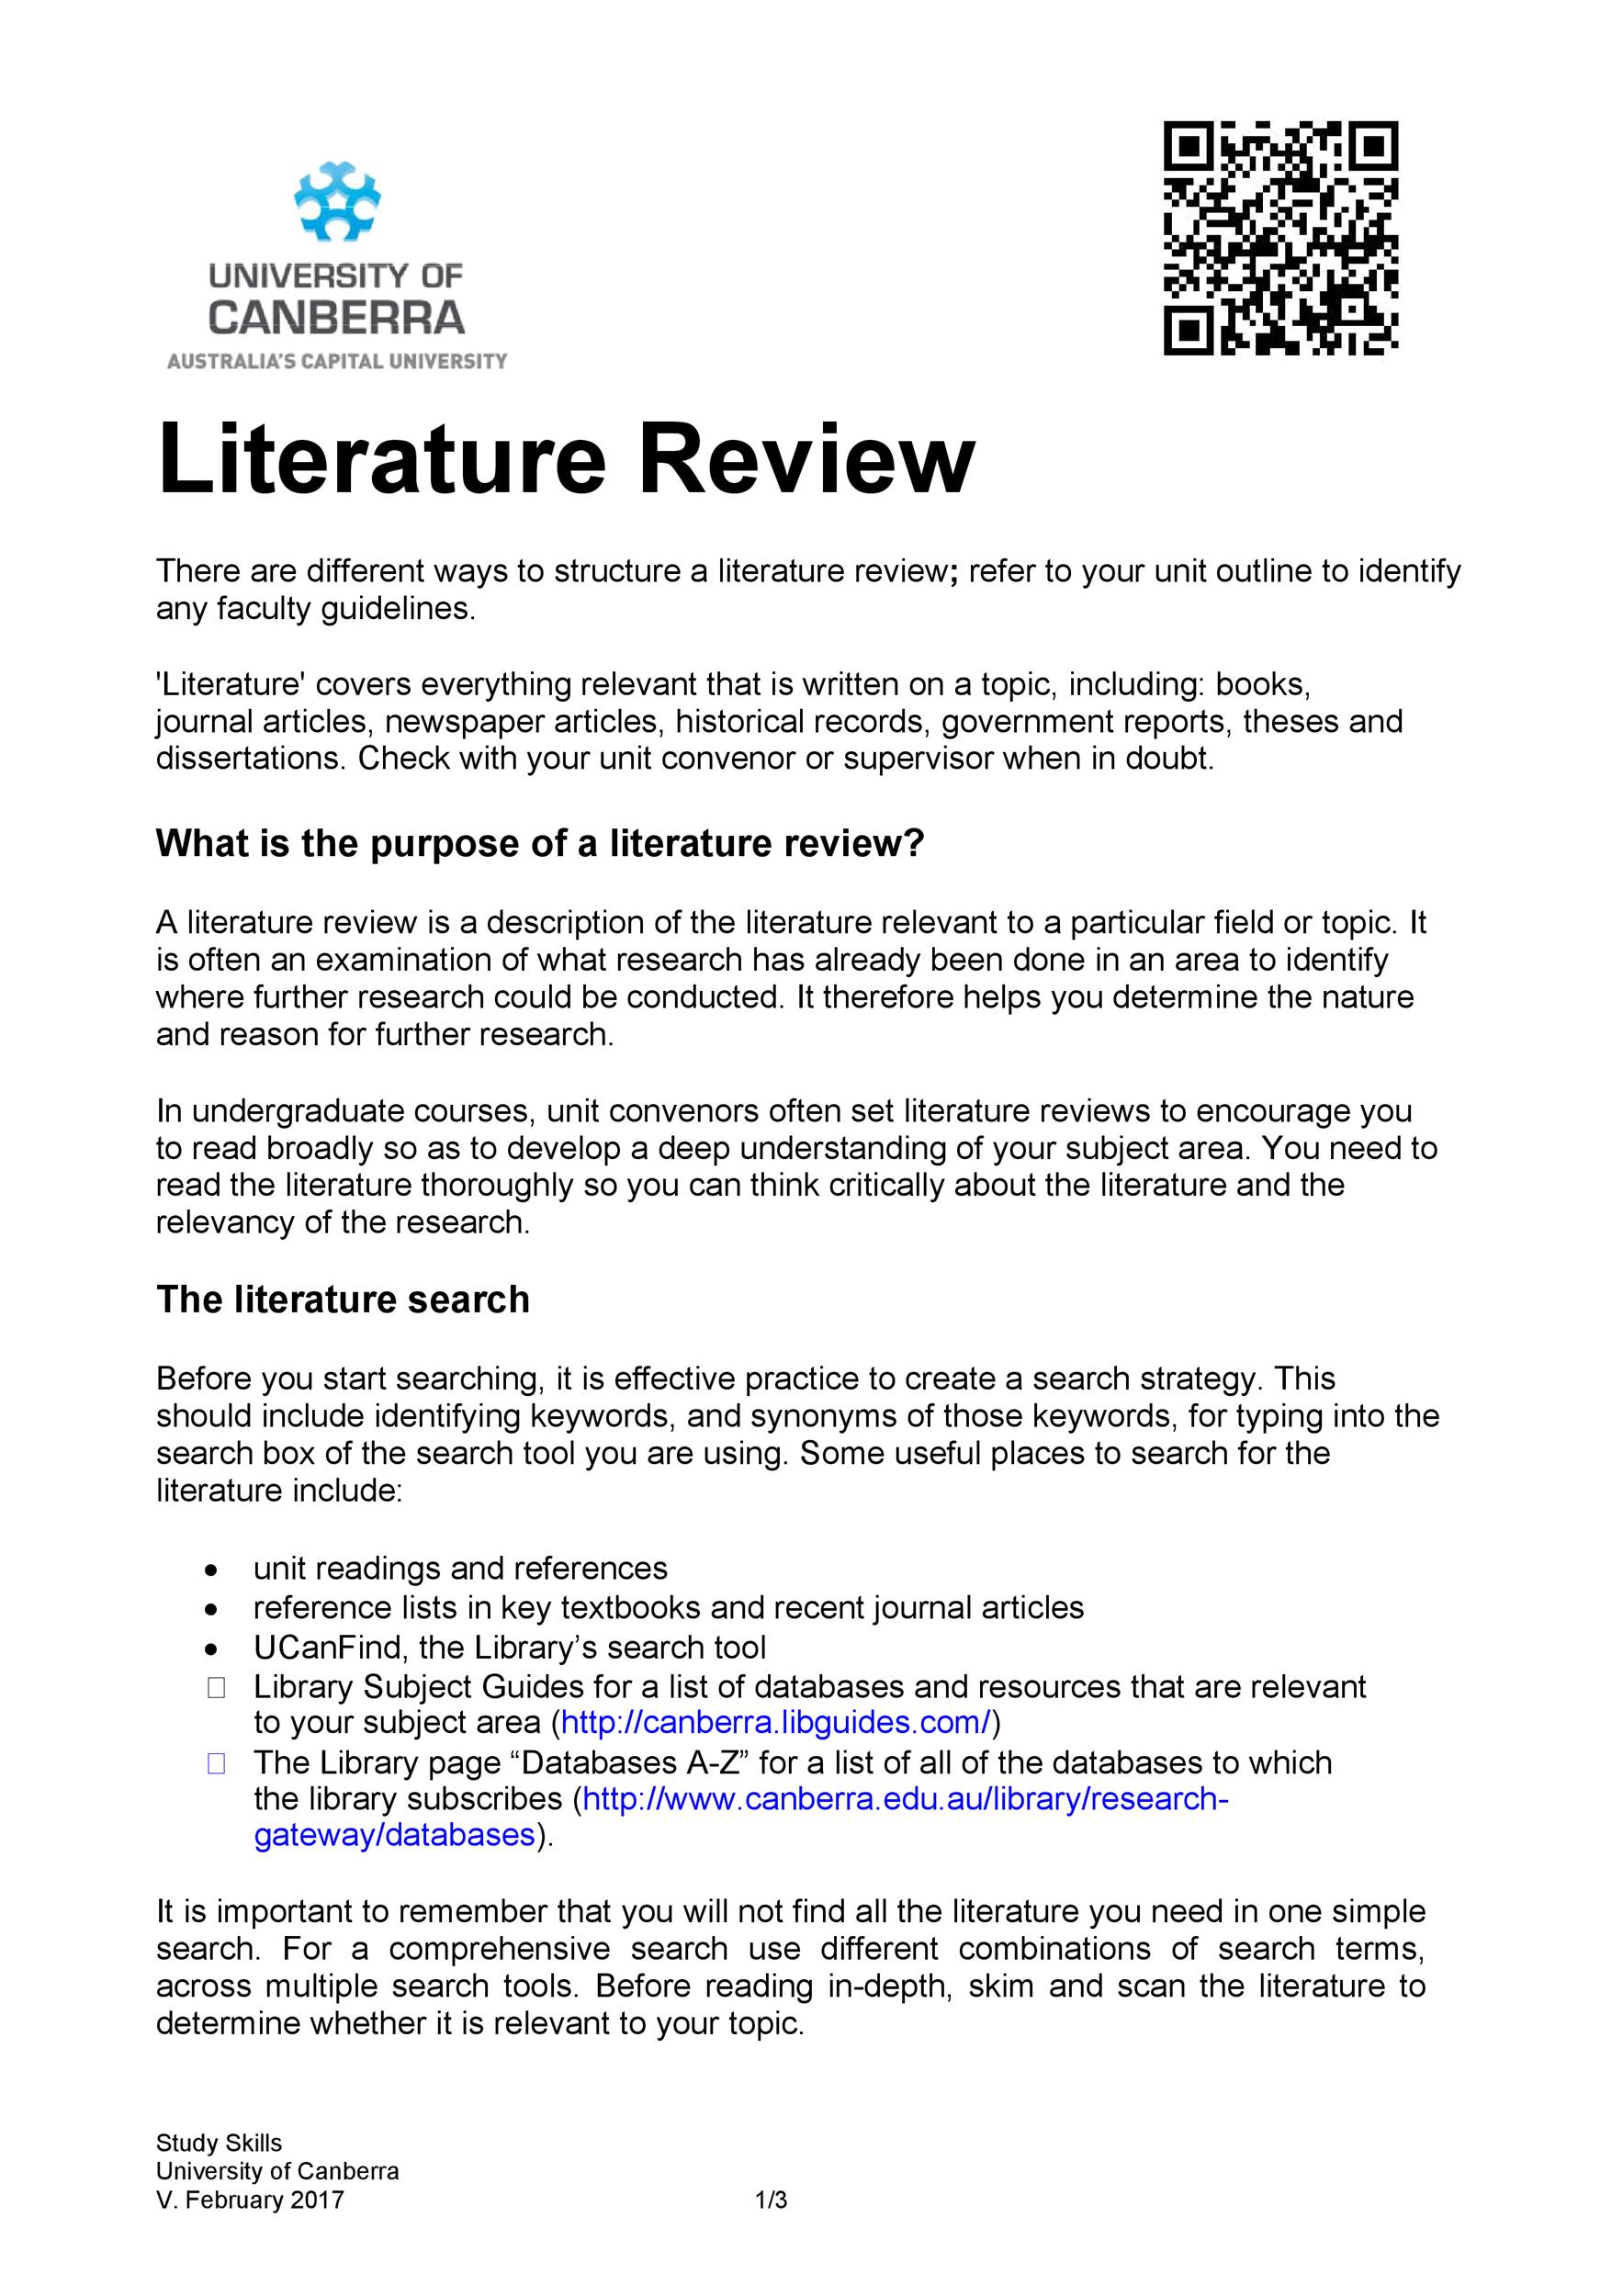 sample of academic literature review